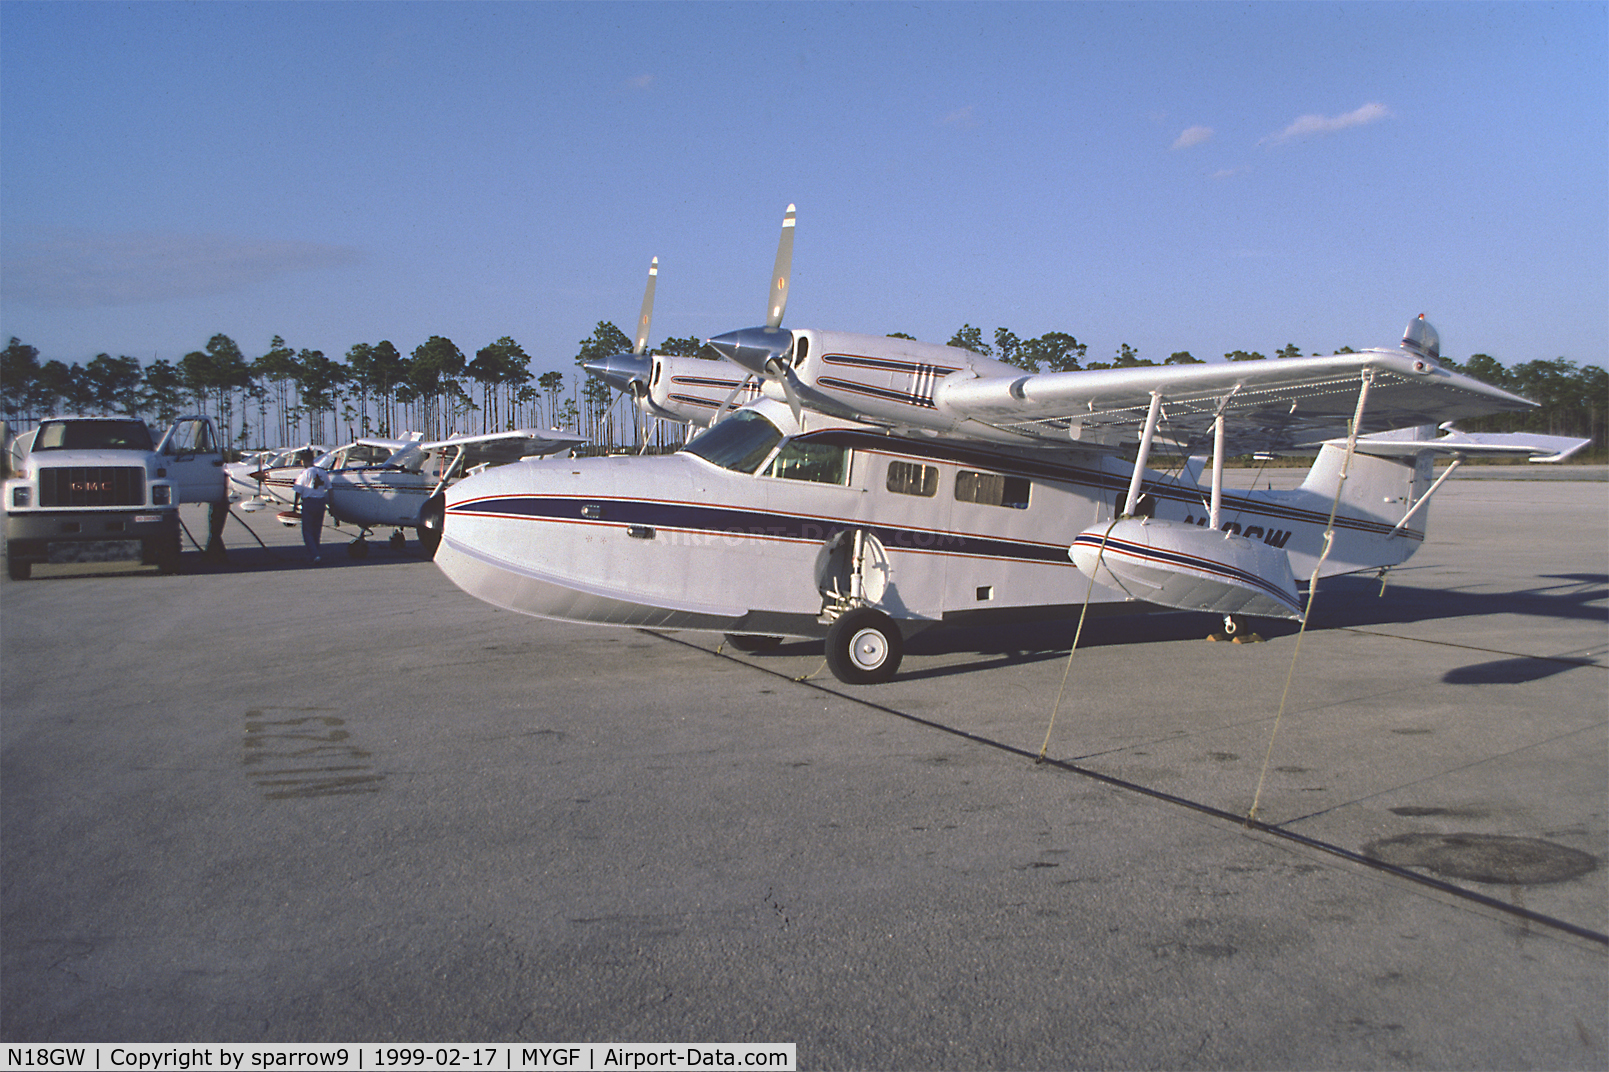 N18GW, 1949 Scan (Grumman) 30 (G-44A Widgeon) C/N 35, Freeport/Bahamas. Scanned from a slide.